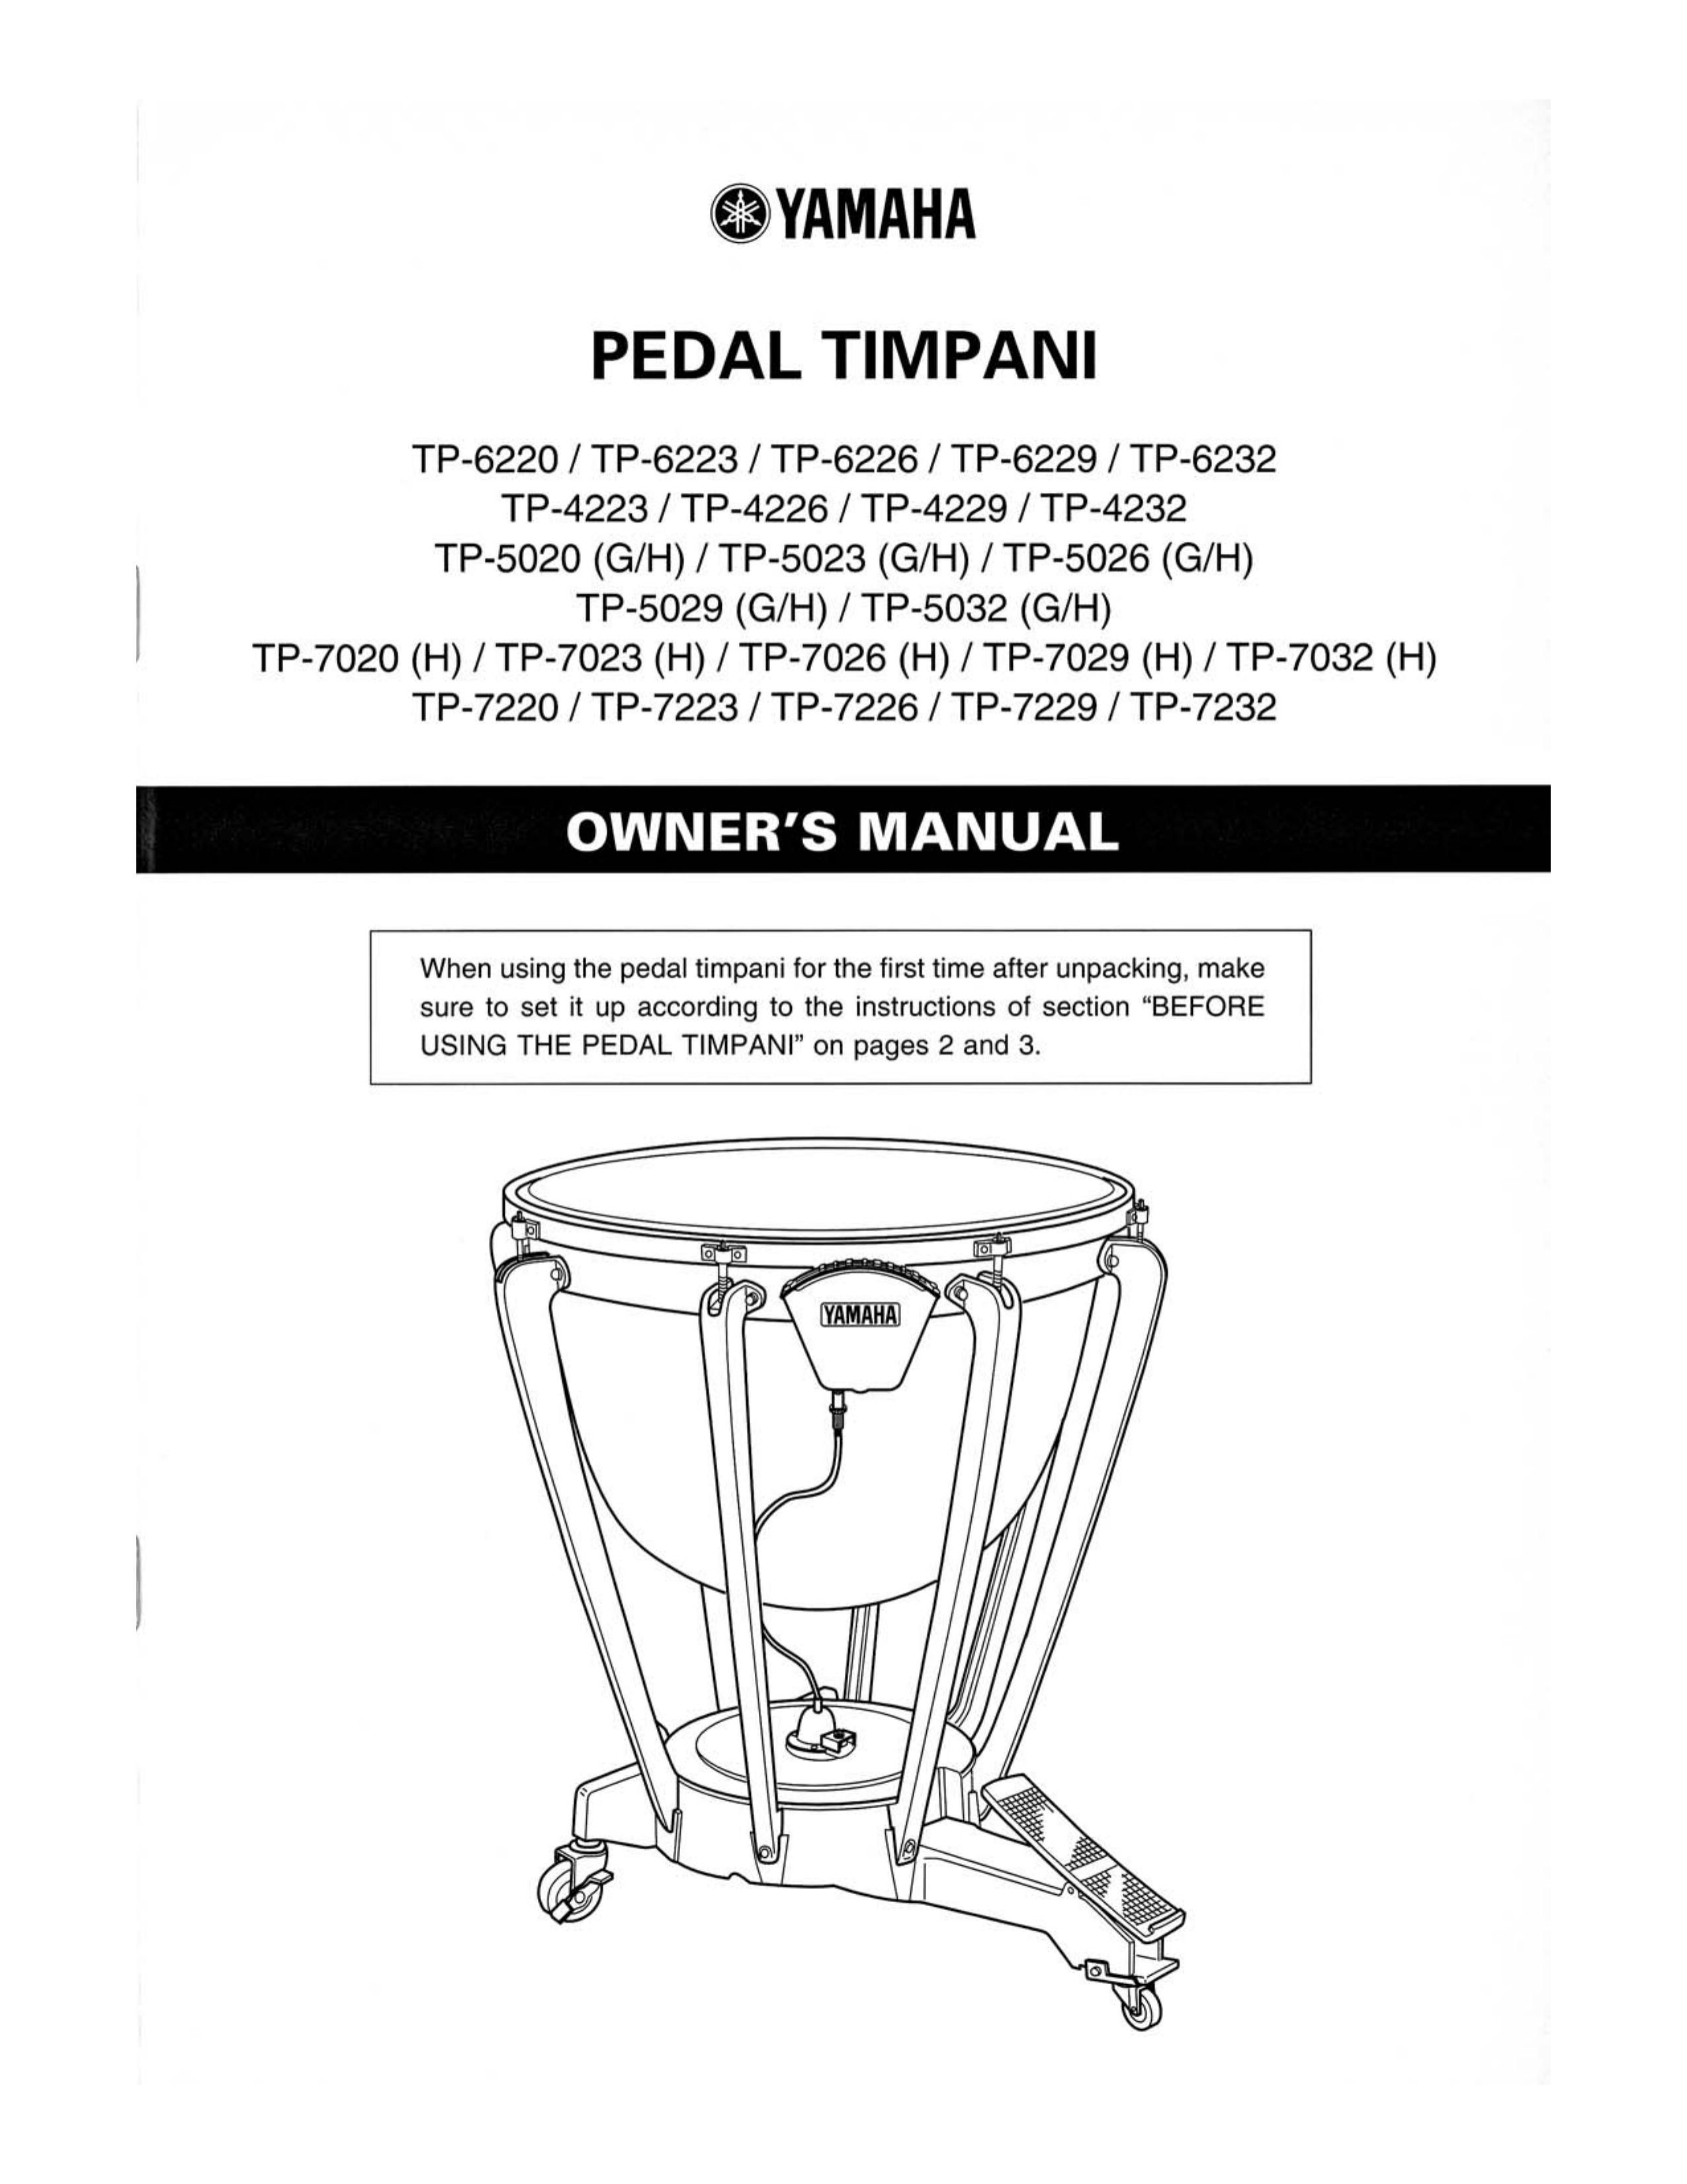 Yamaha TP-4229 Music Pedal User Manual